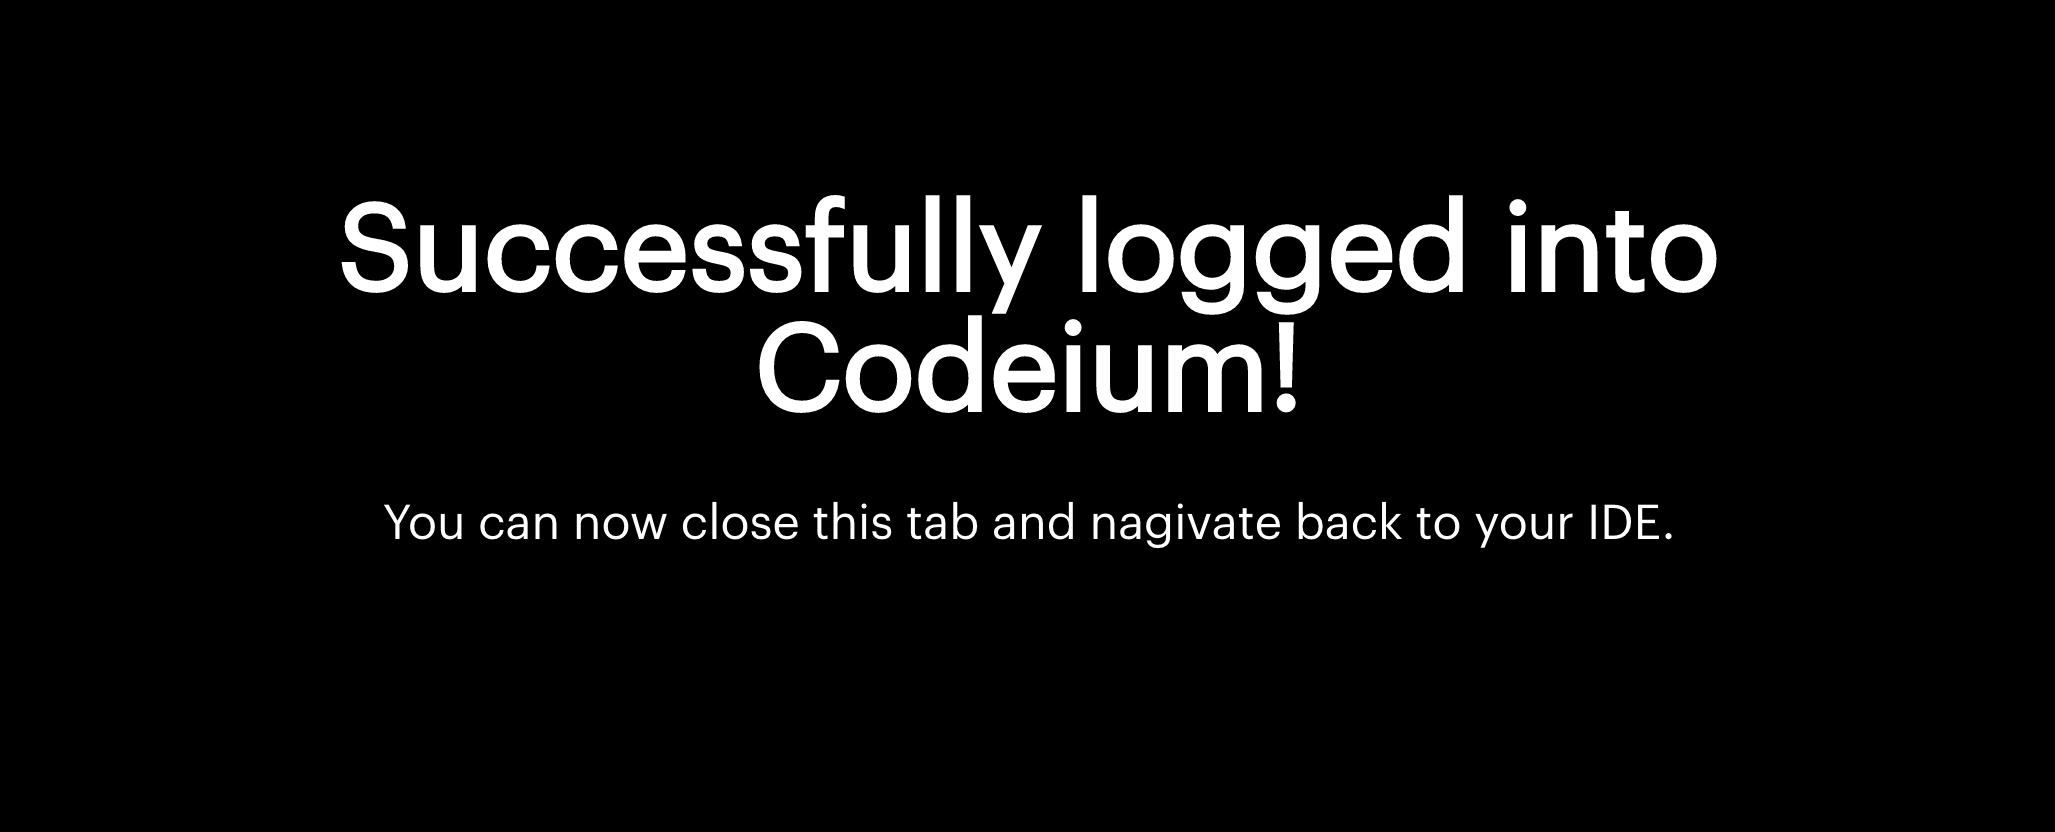 Success message on Codeium website